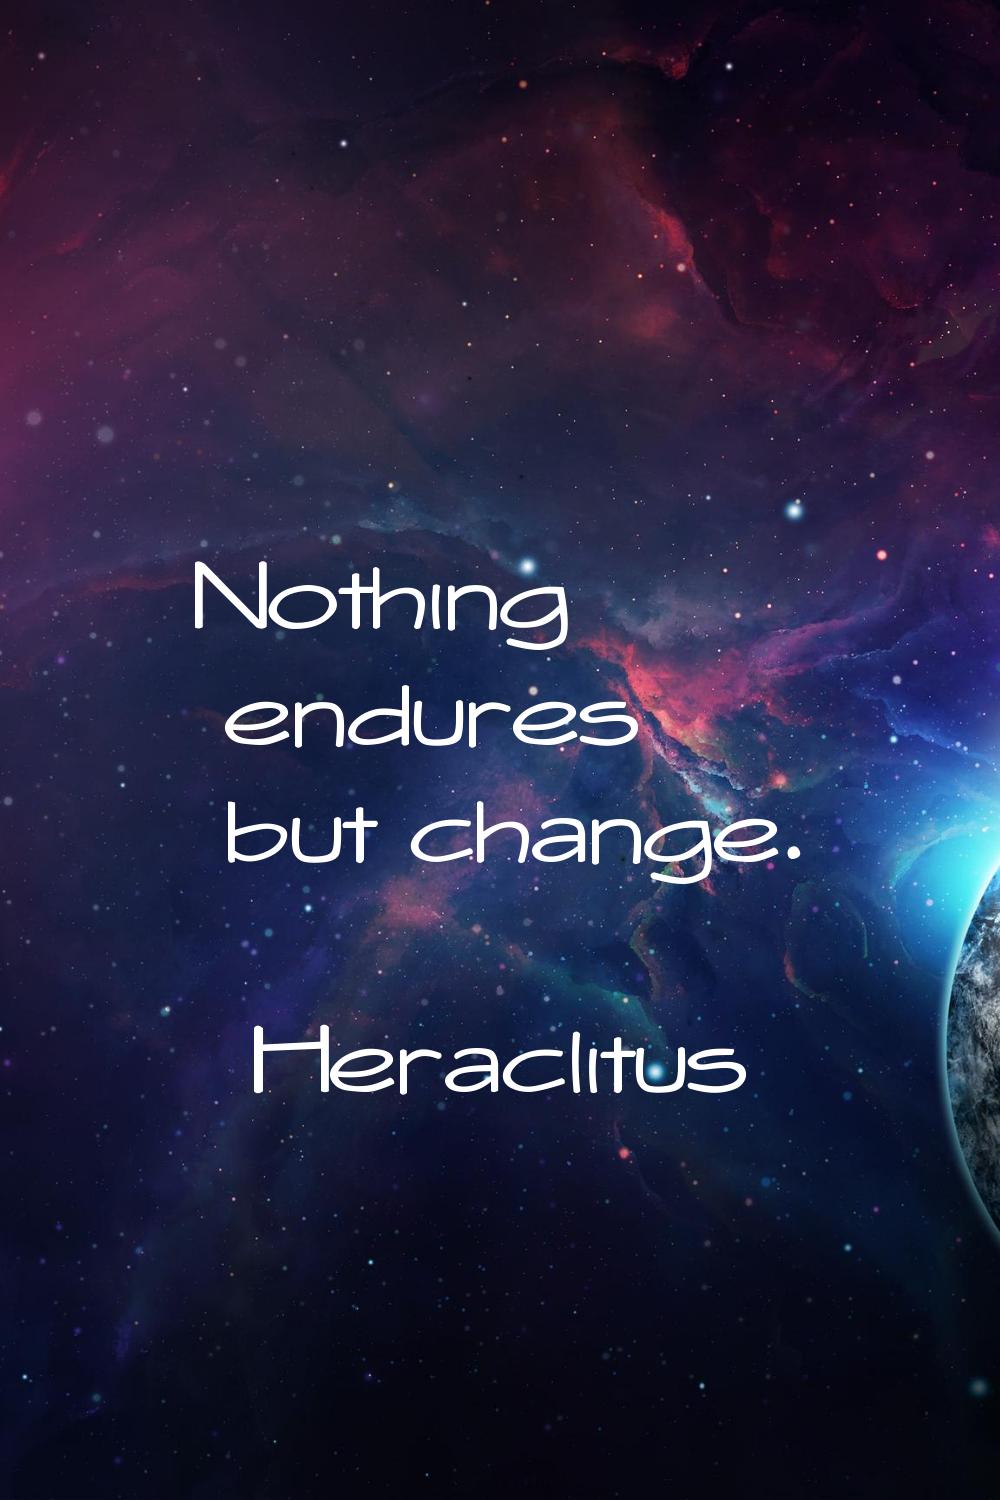 Nothing endures but change.